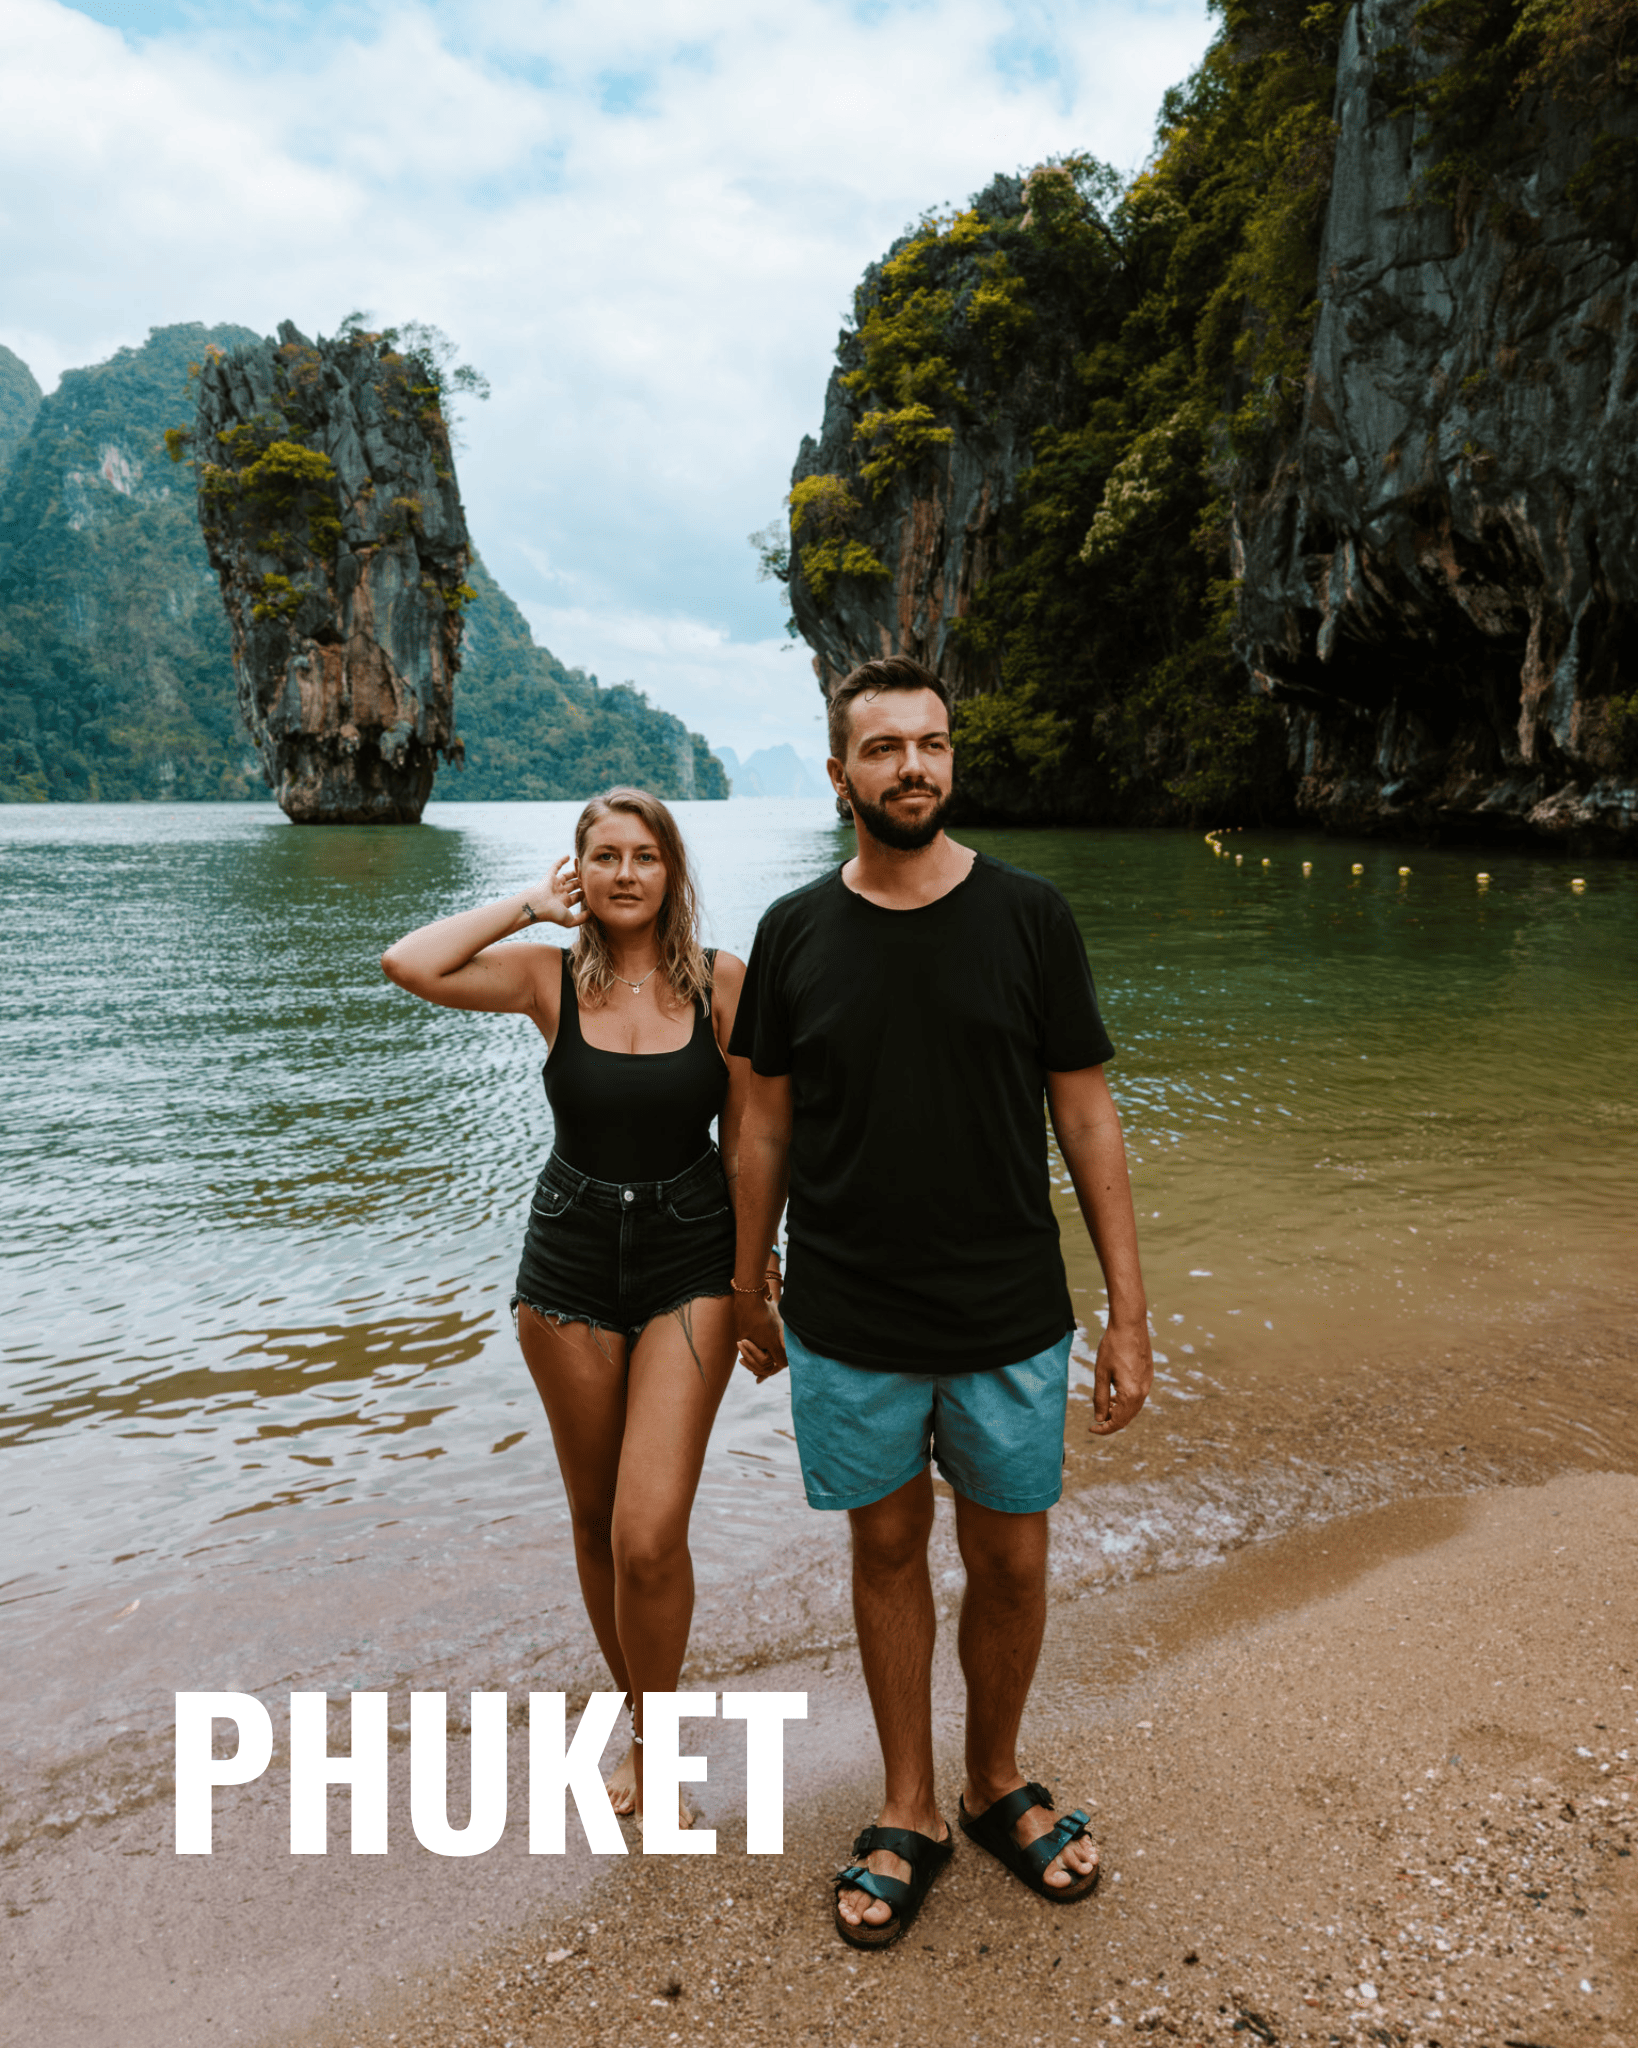 Phuket, Thailand: 8 Best Things to Do phuket